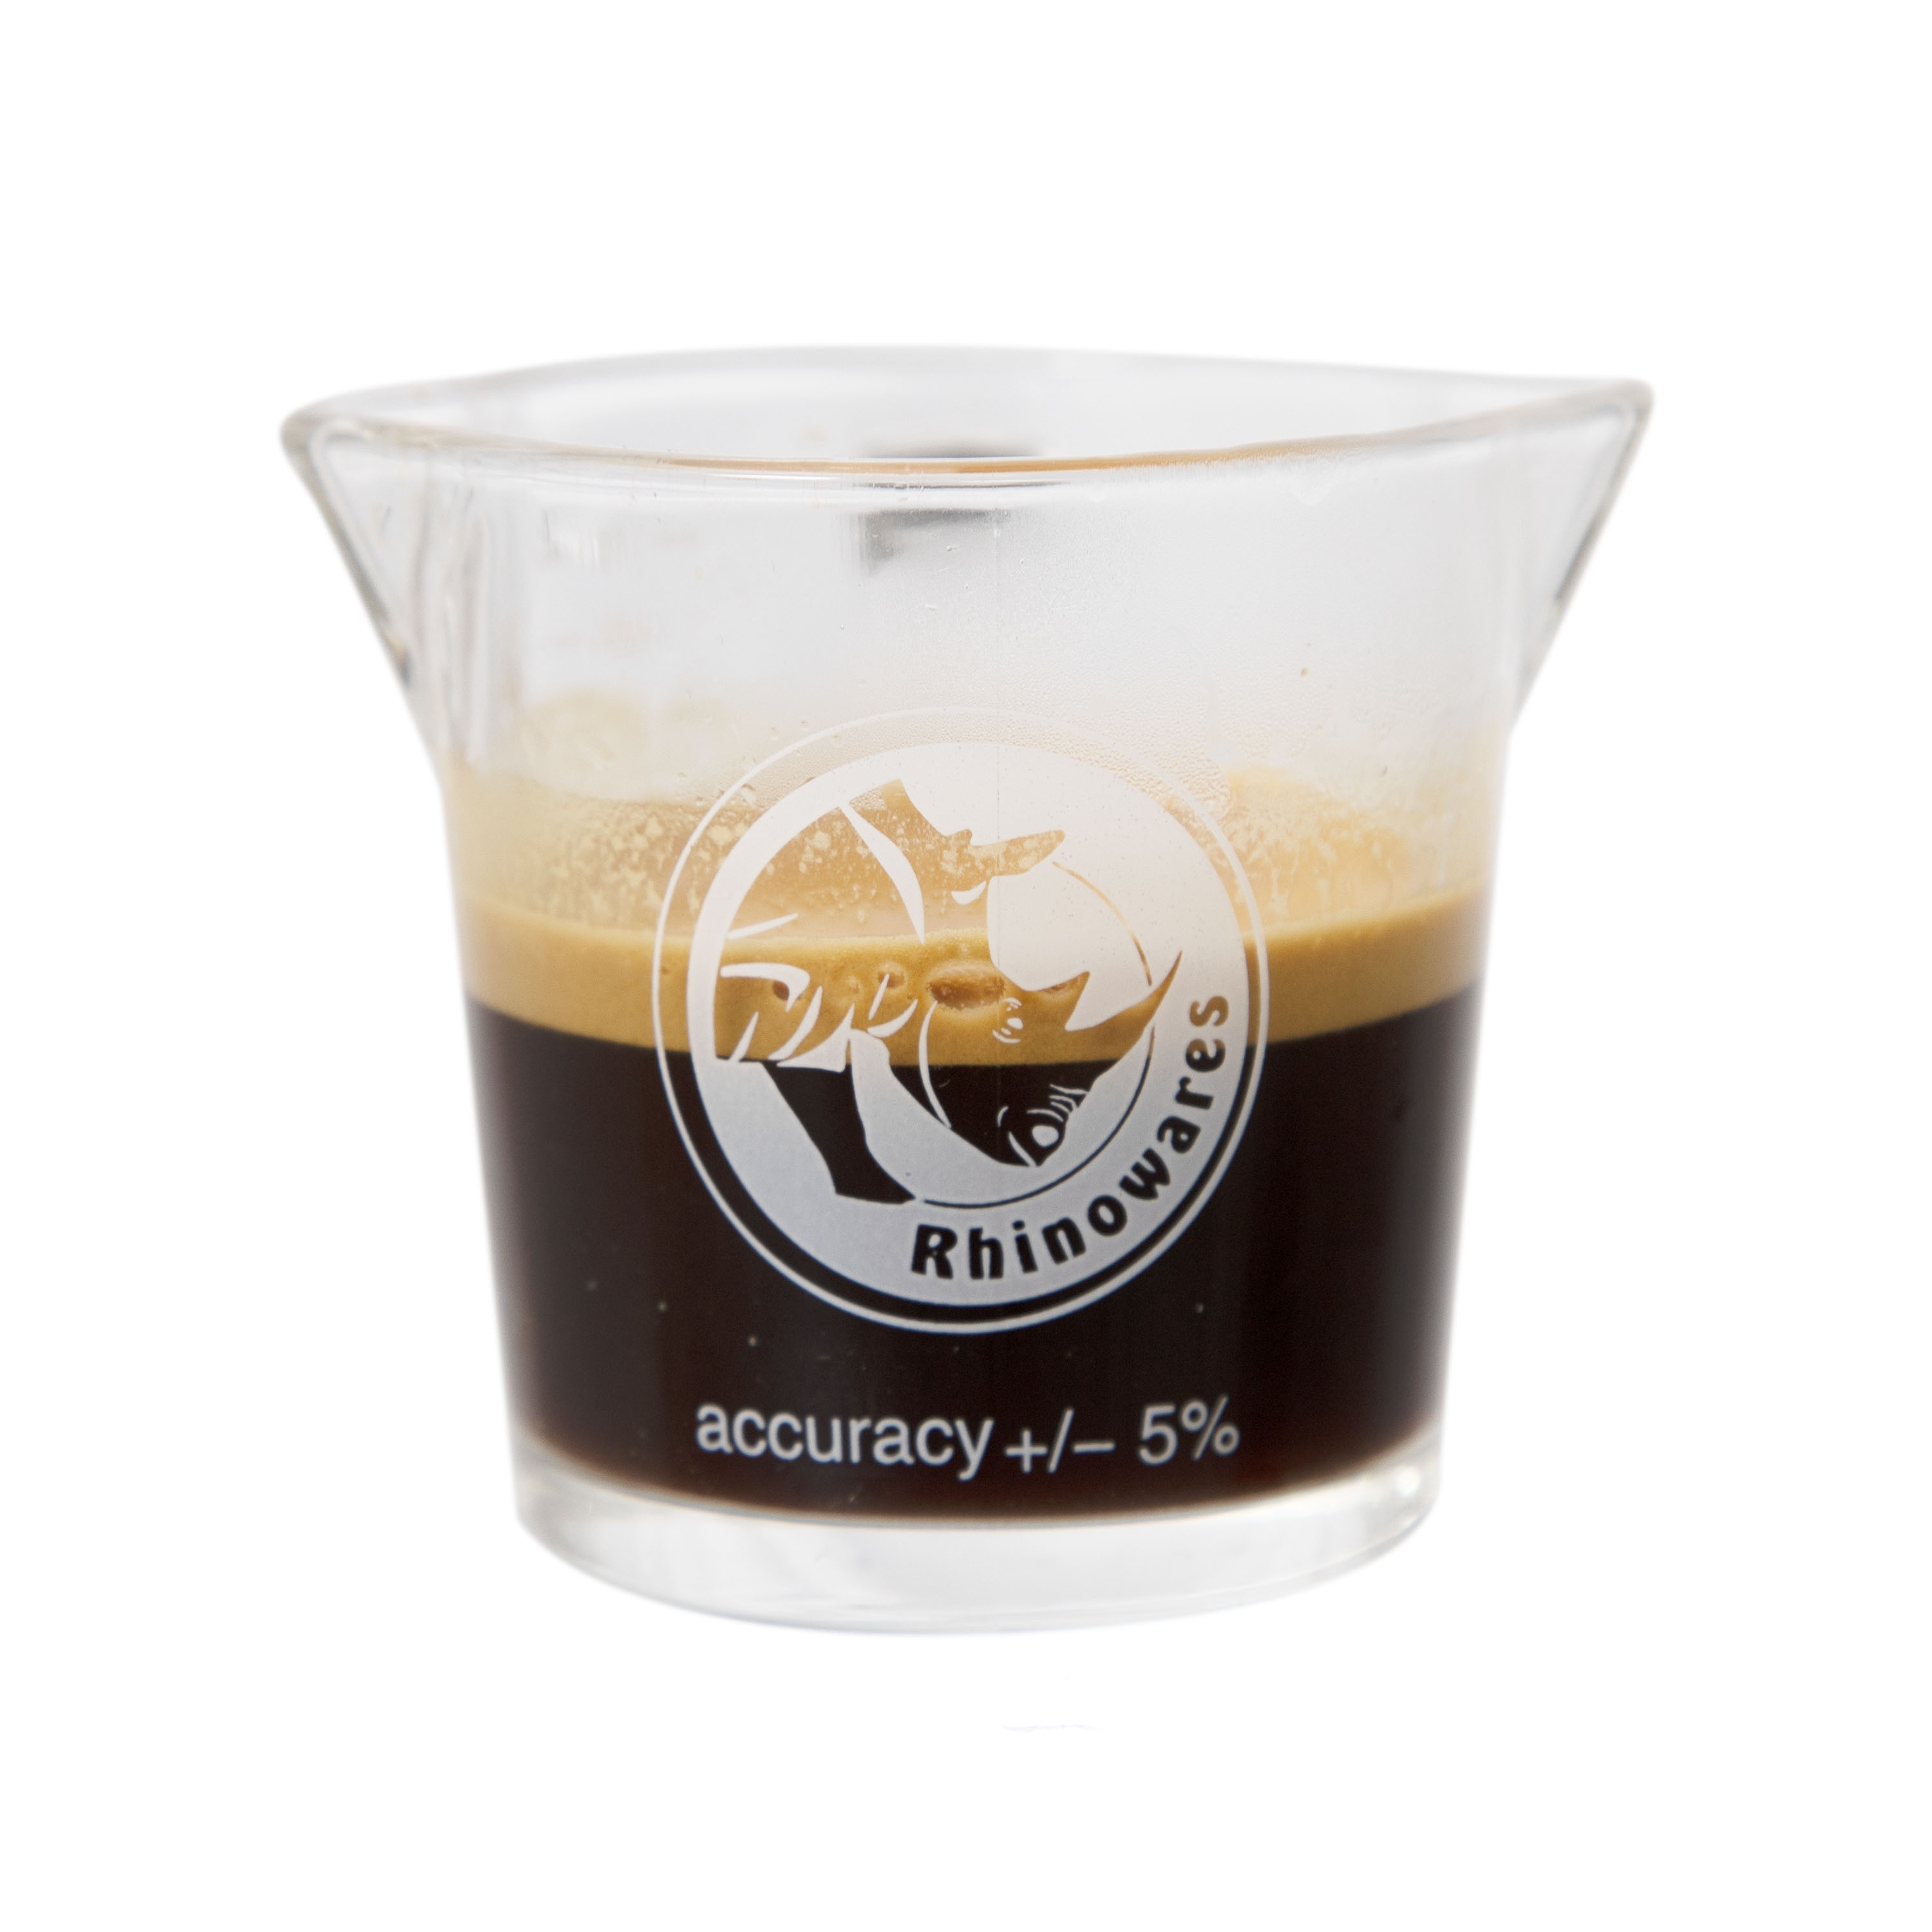 Generic Espresso Shot Glasses 3 oz Double Spouts Measuring Cup Espresso Accessories with Pouring Handle for Coffee Espresso Making (2 P